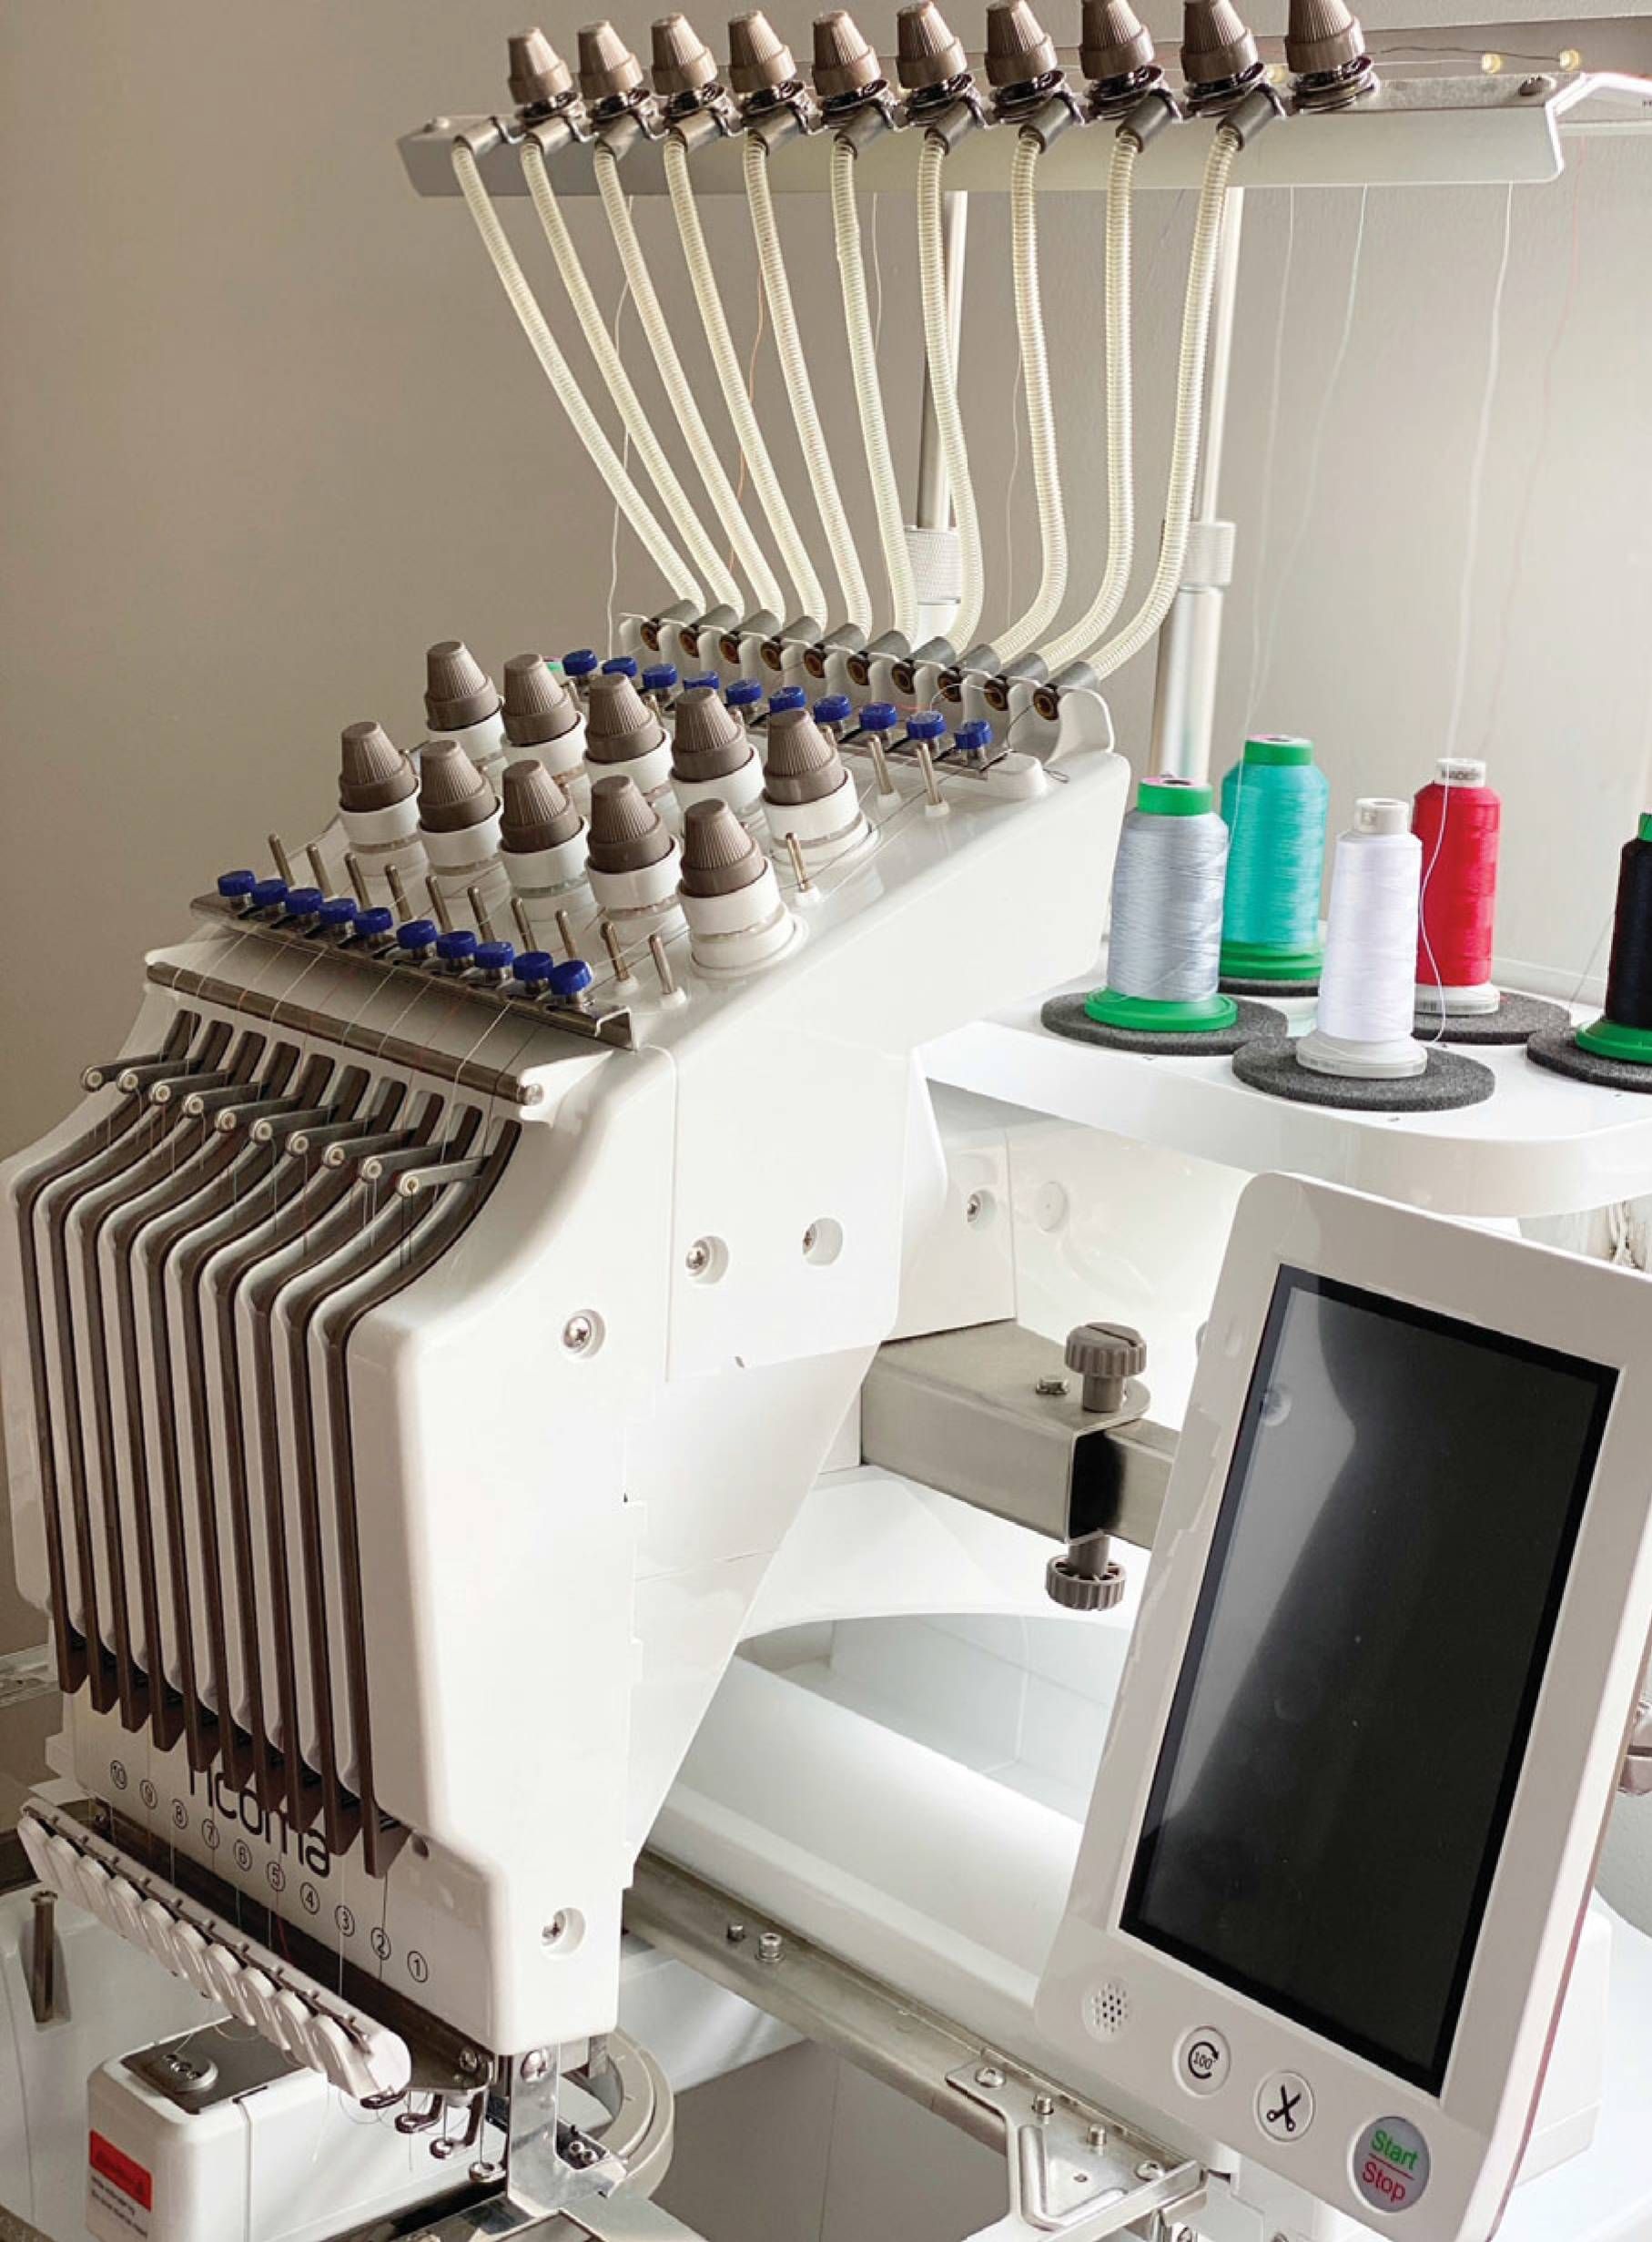 A multi-needle embroidery machine